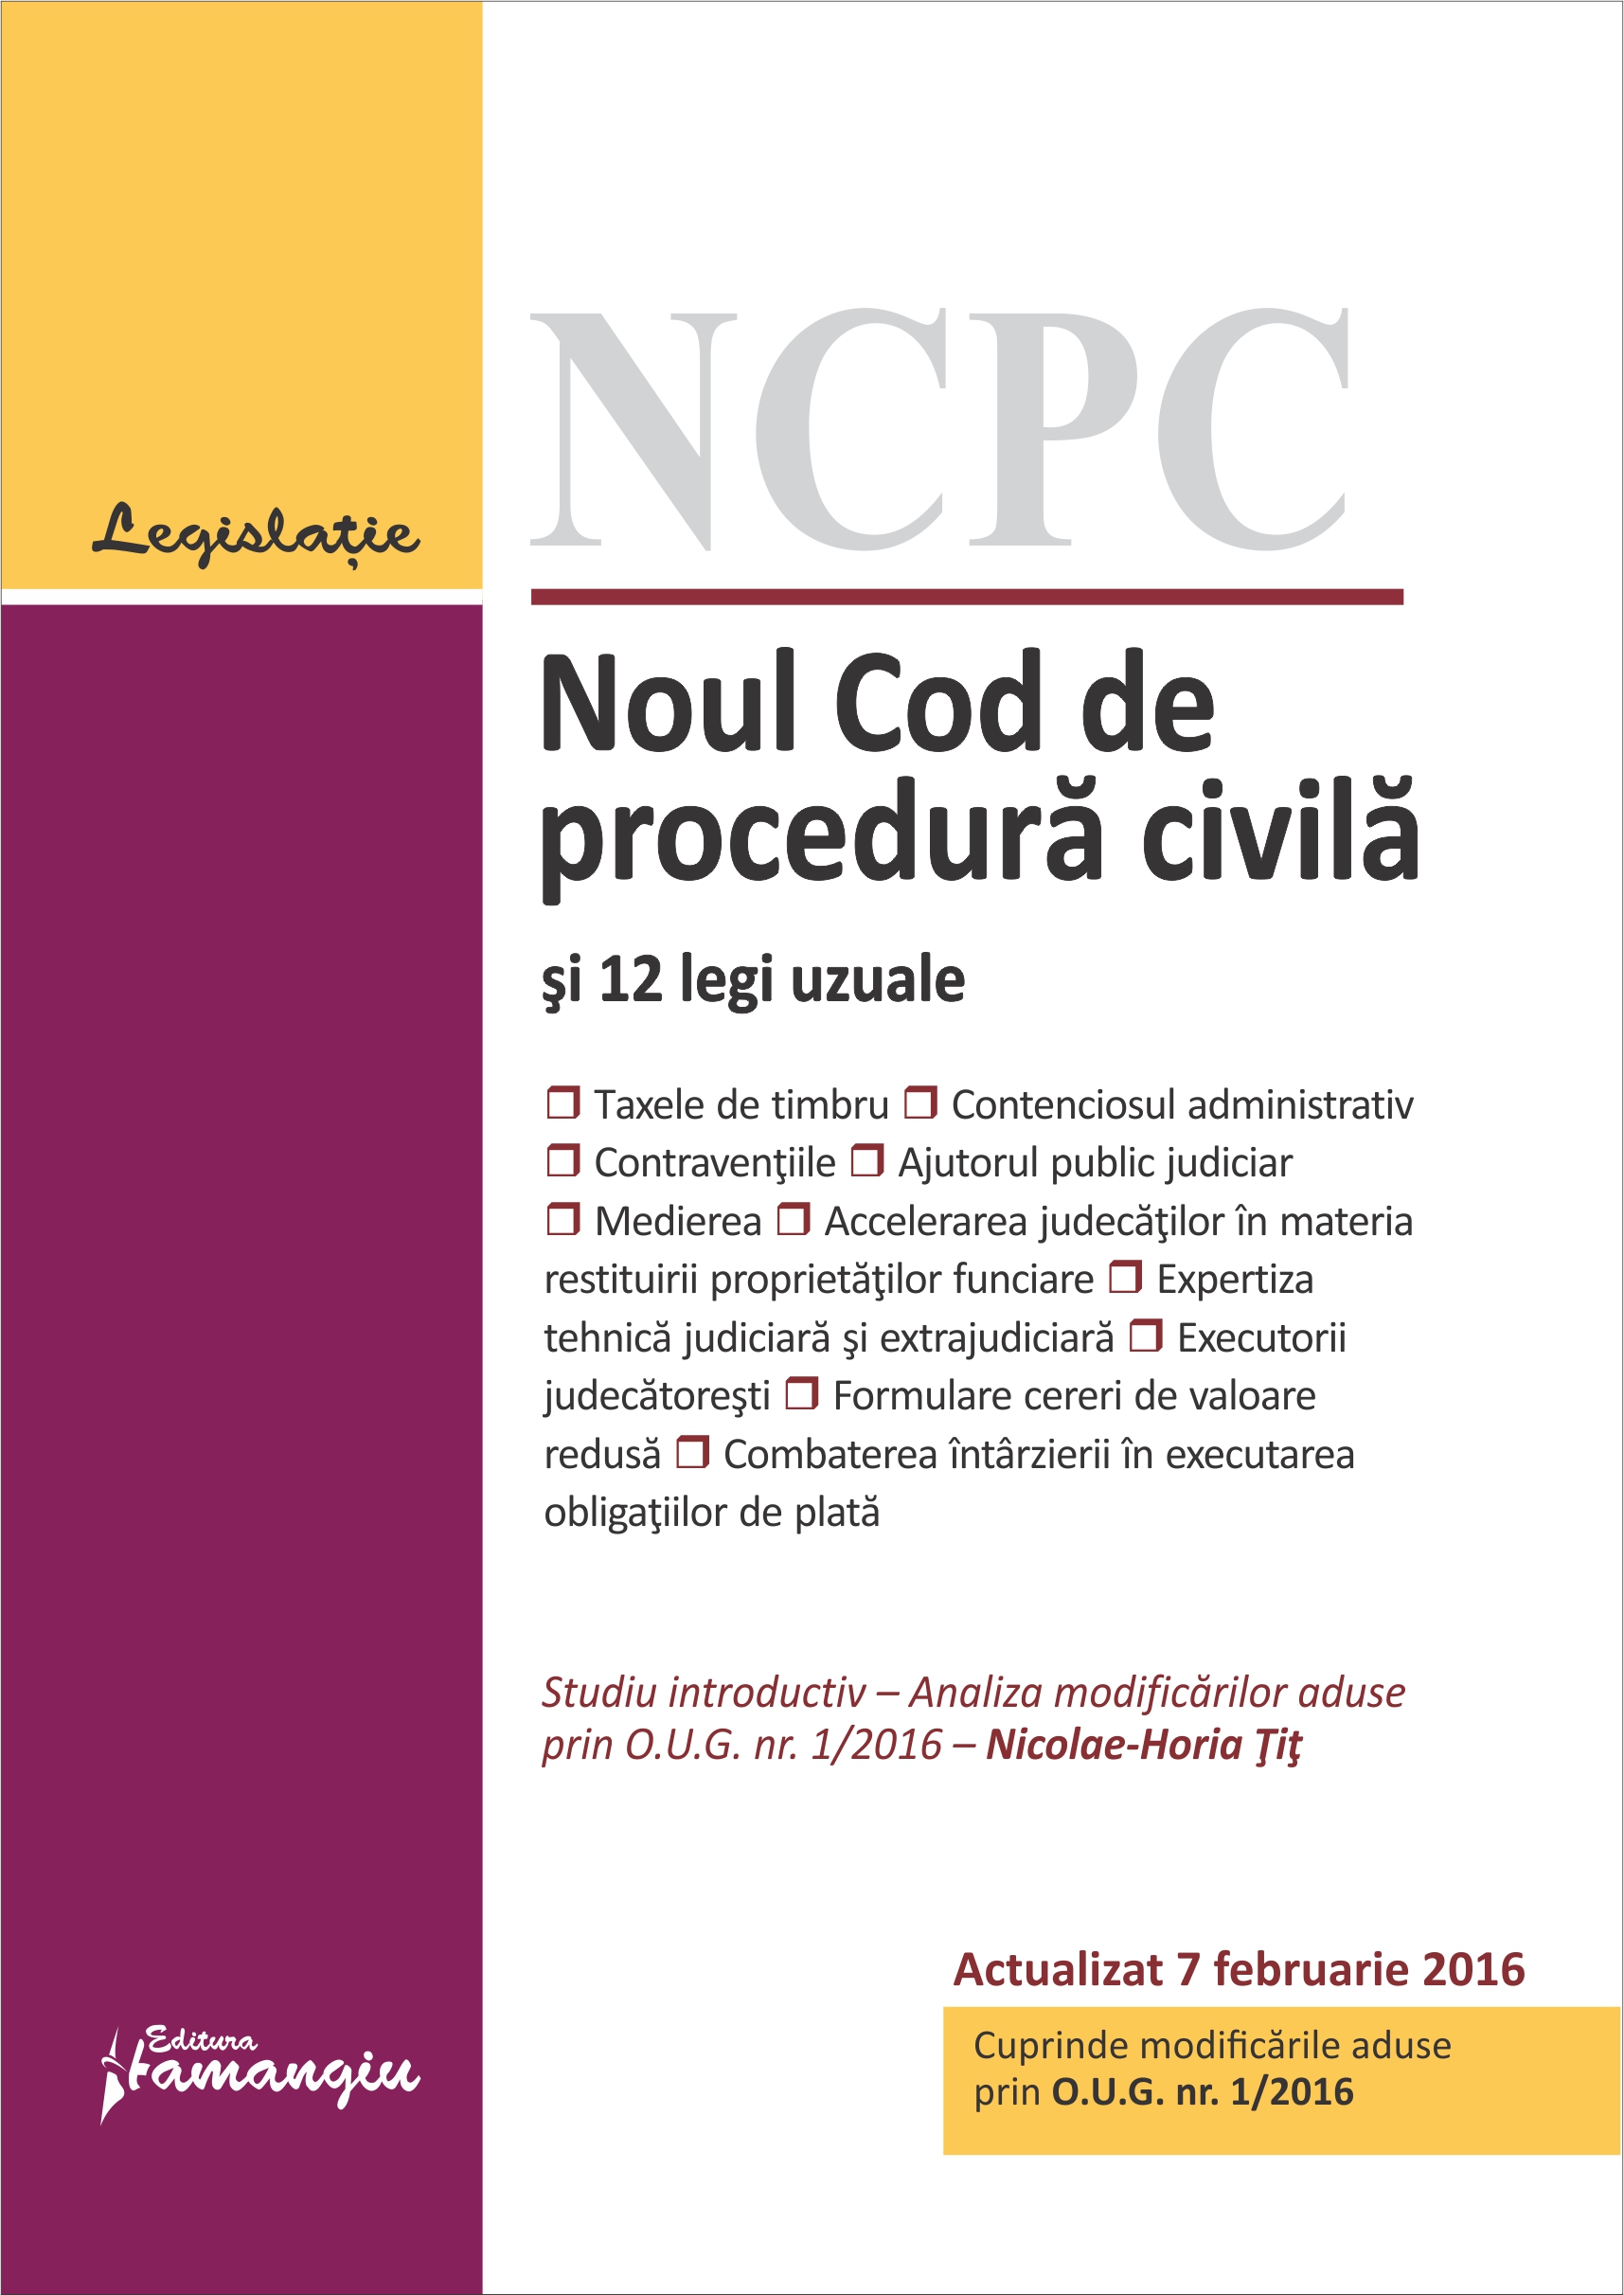 Noul Cod de procedura civila si 12 Legi uzuale act. 7 februarie 2016